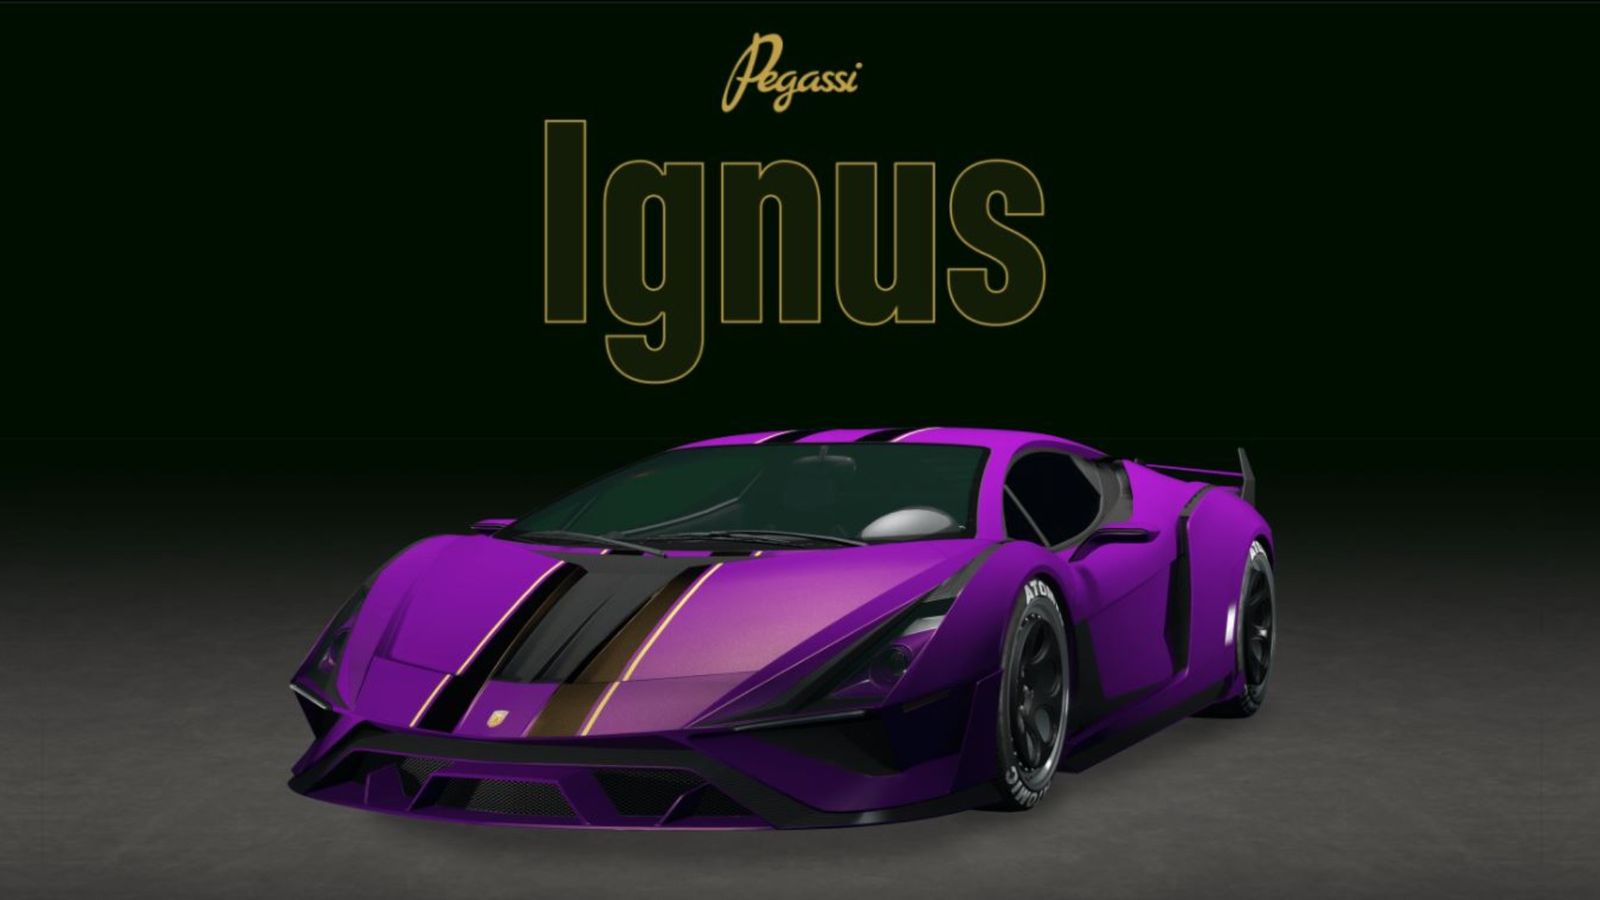 GTA Online Pegassi Ignus in Purple